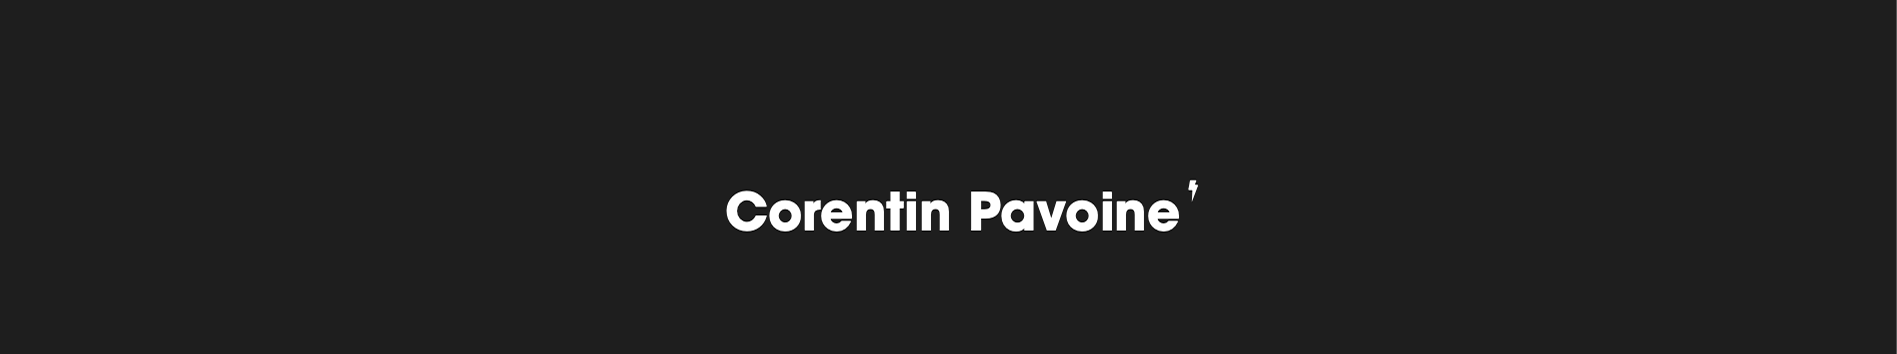 Corentin Pavoine's profile banner